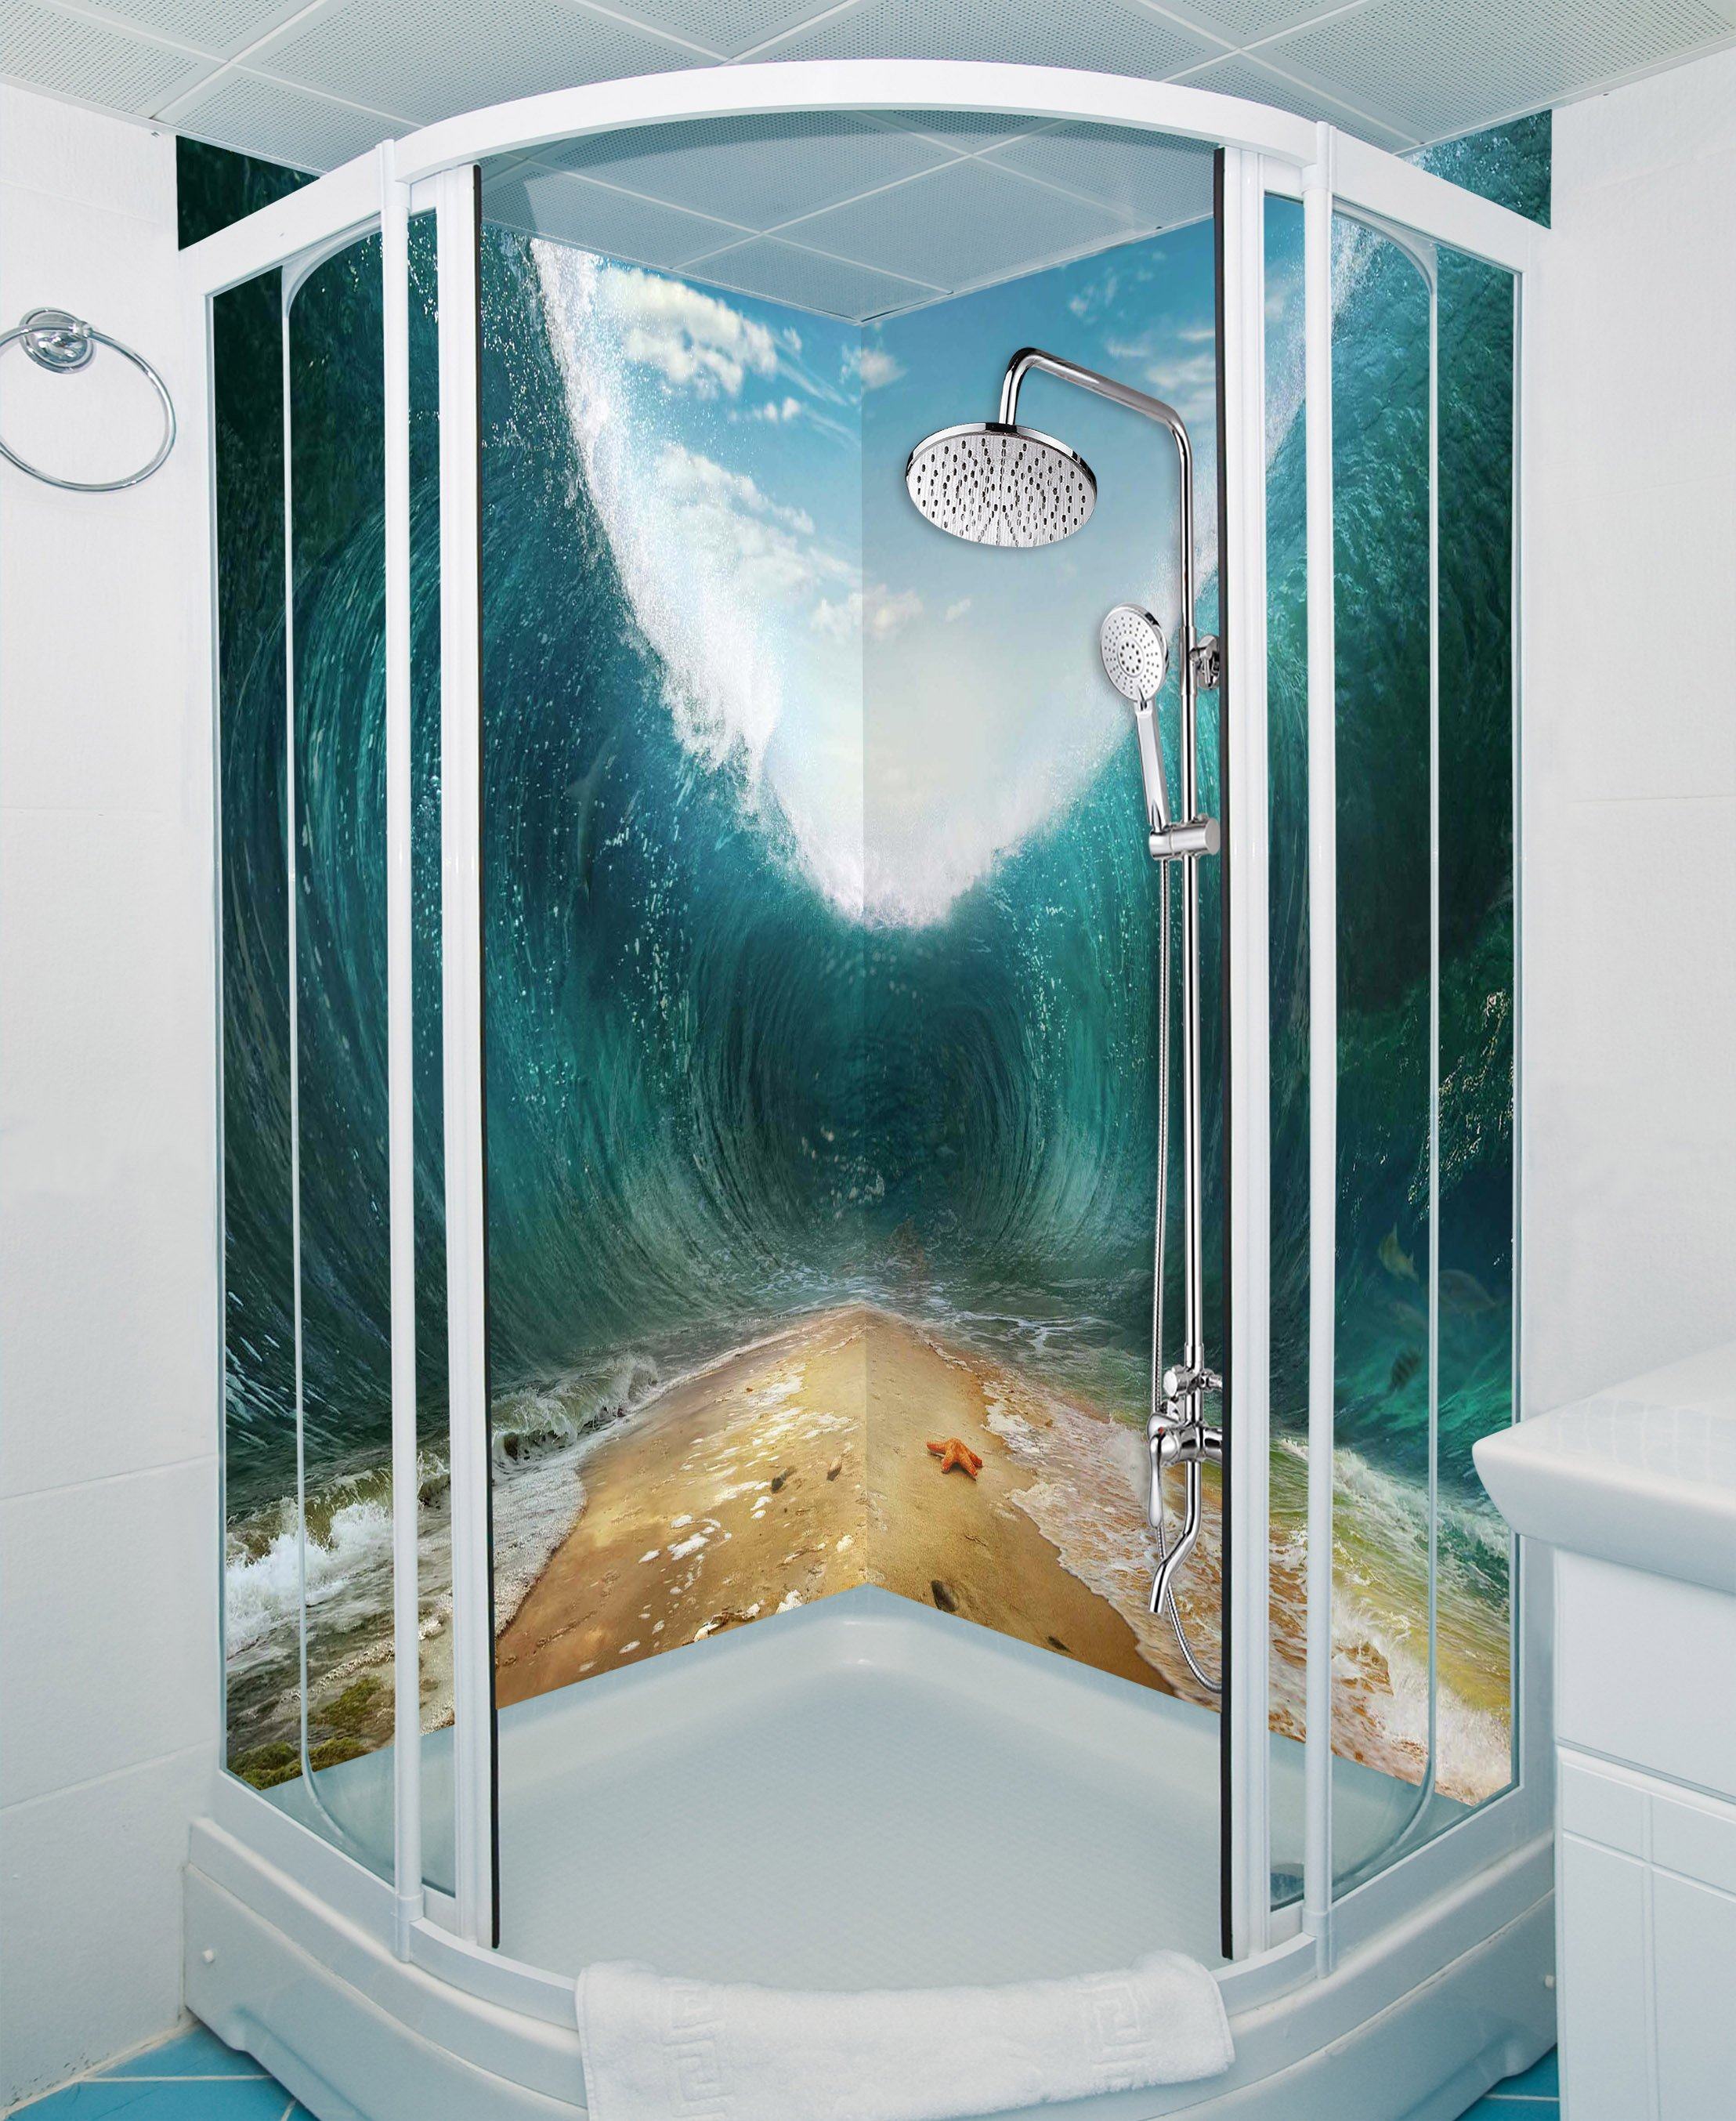 3D Beach High Waves 36 Bathroom Wallpaper Wallpaper AJ Wallpaper 